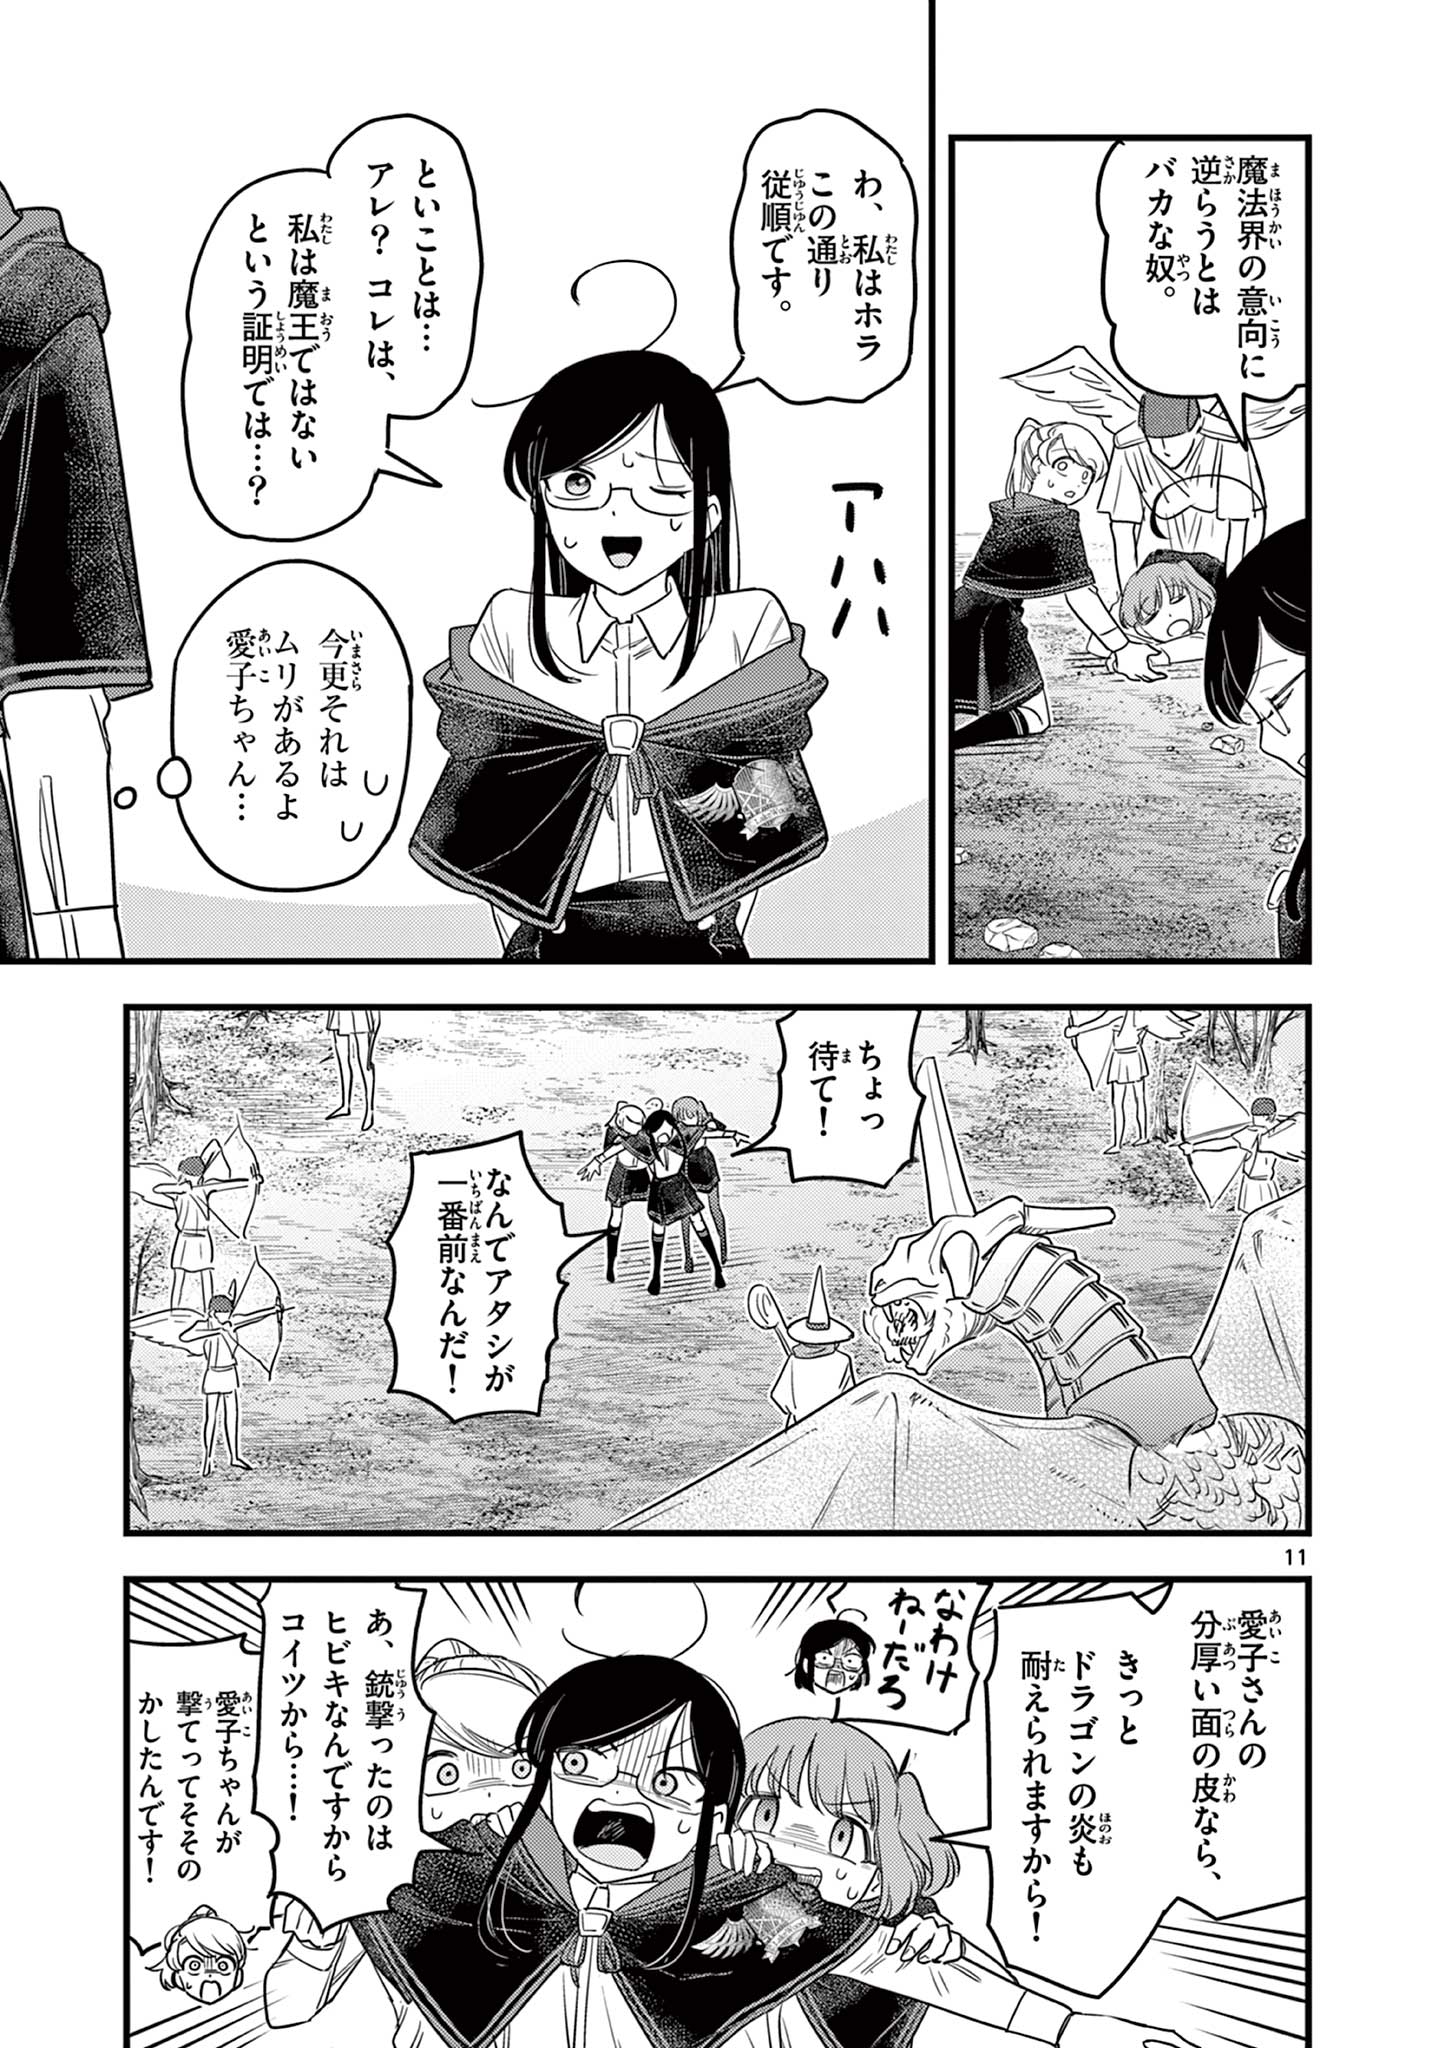 Kuro Mahou Ryou no Sanakunin - Chapter 8 - Page 11